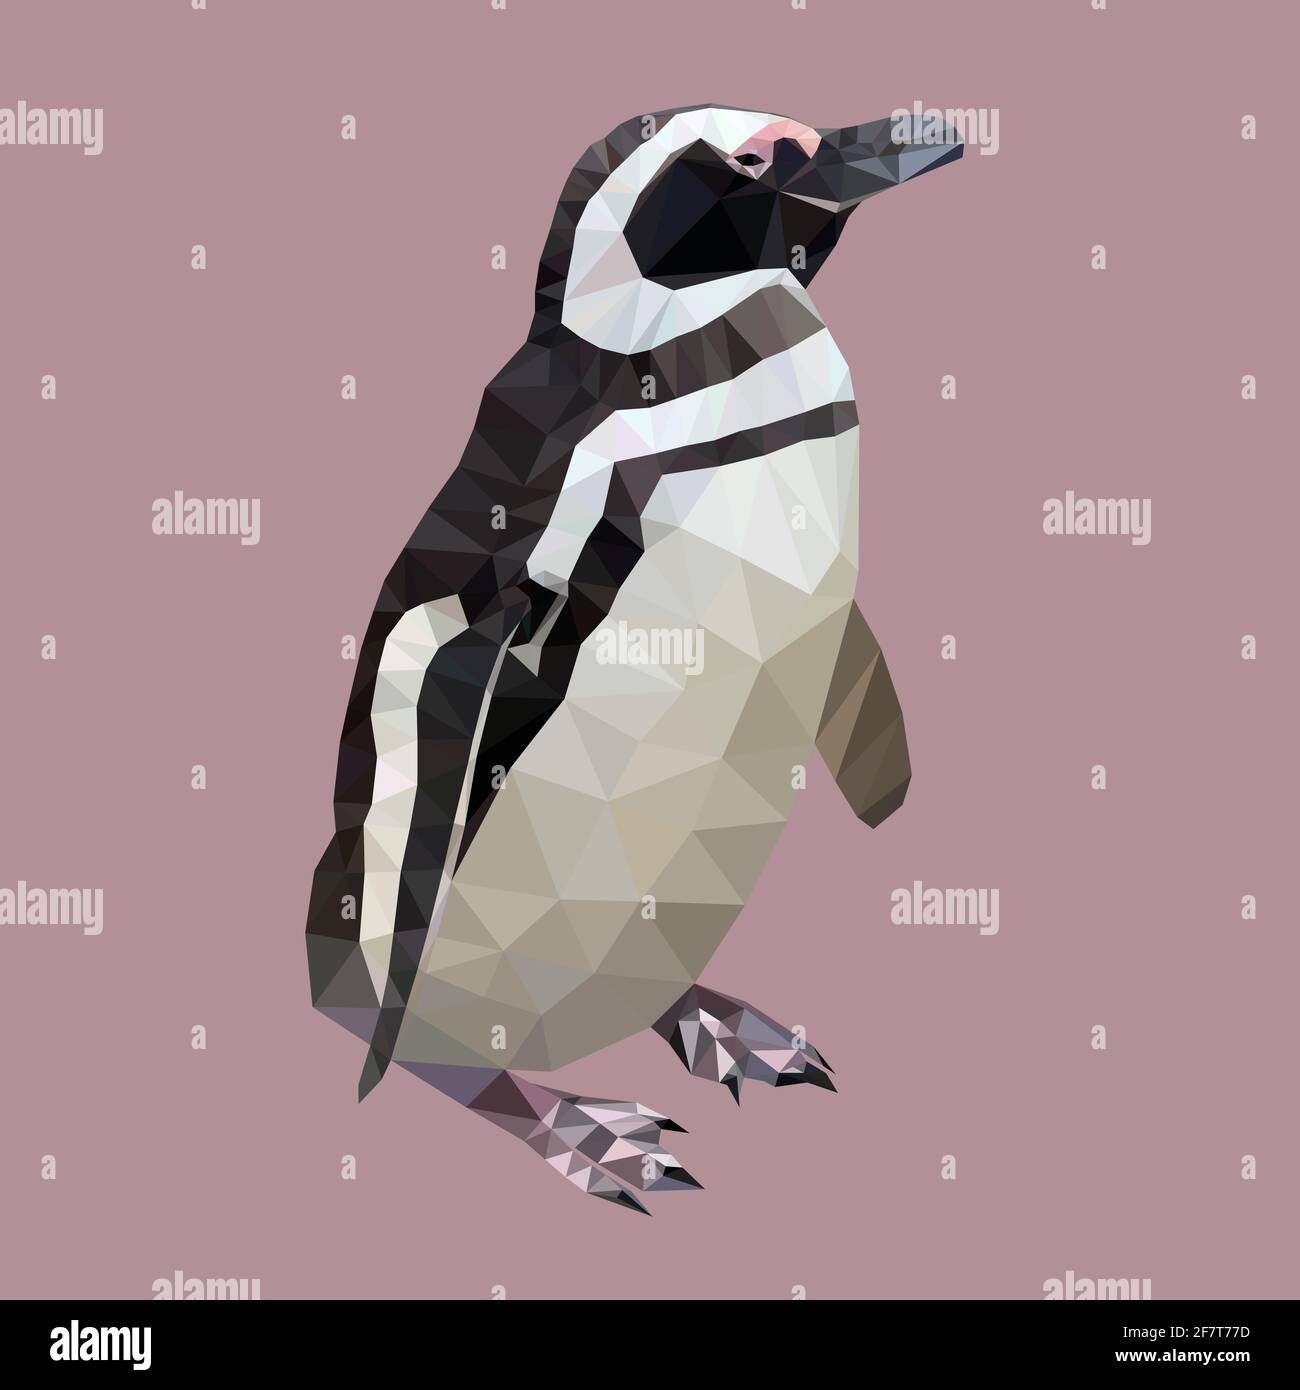 magellanic penguin in low poly technique vector illustration Stock Vector